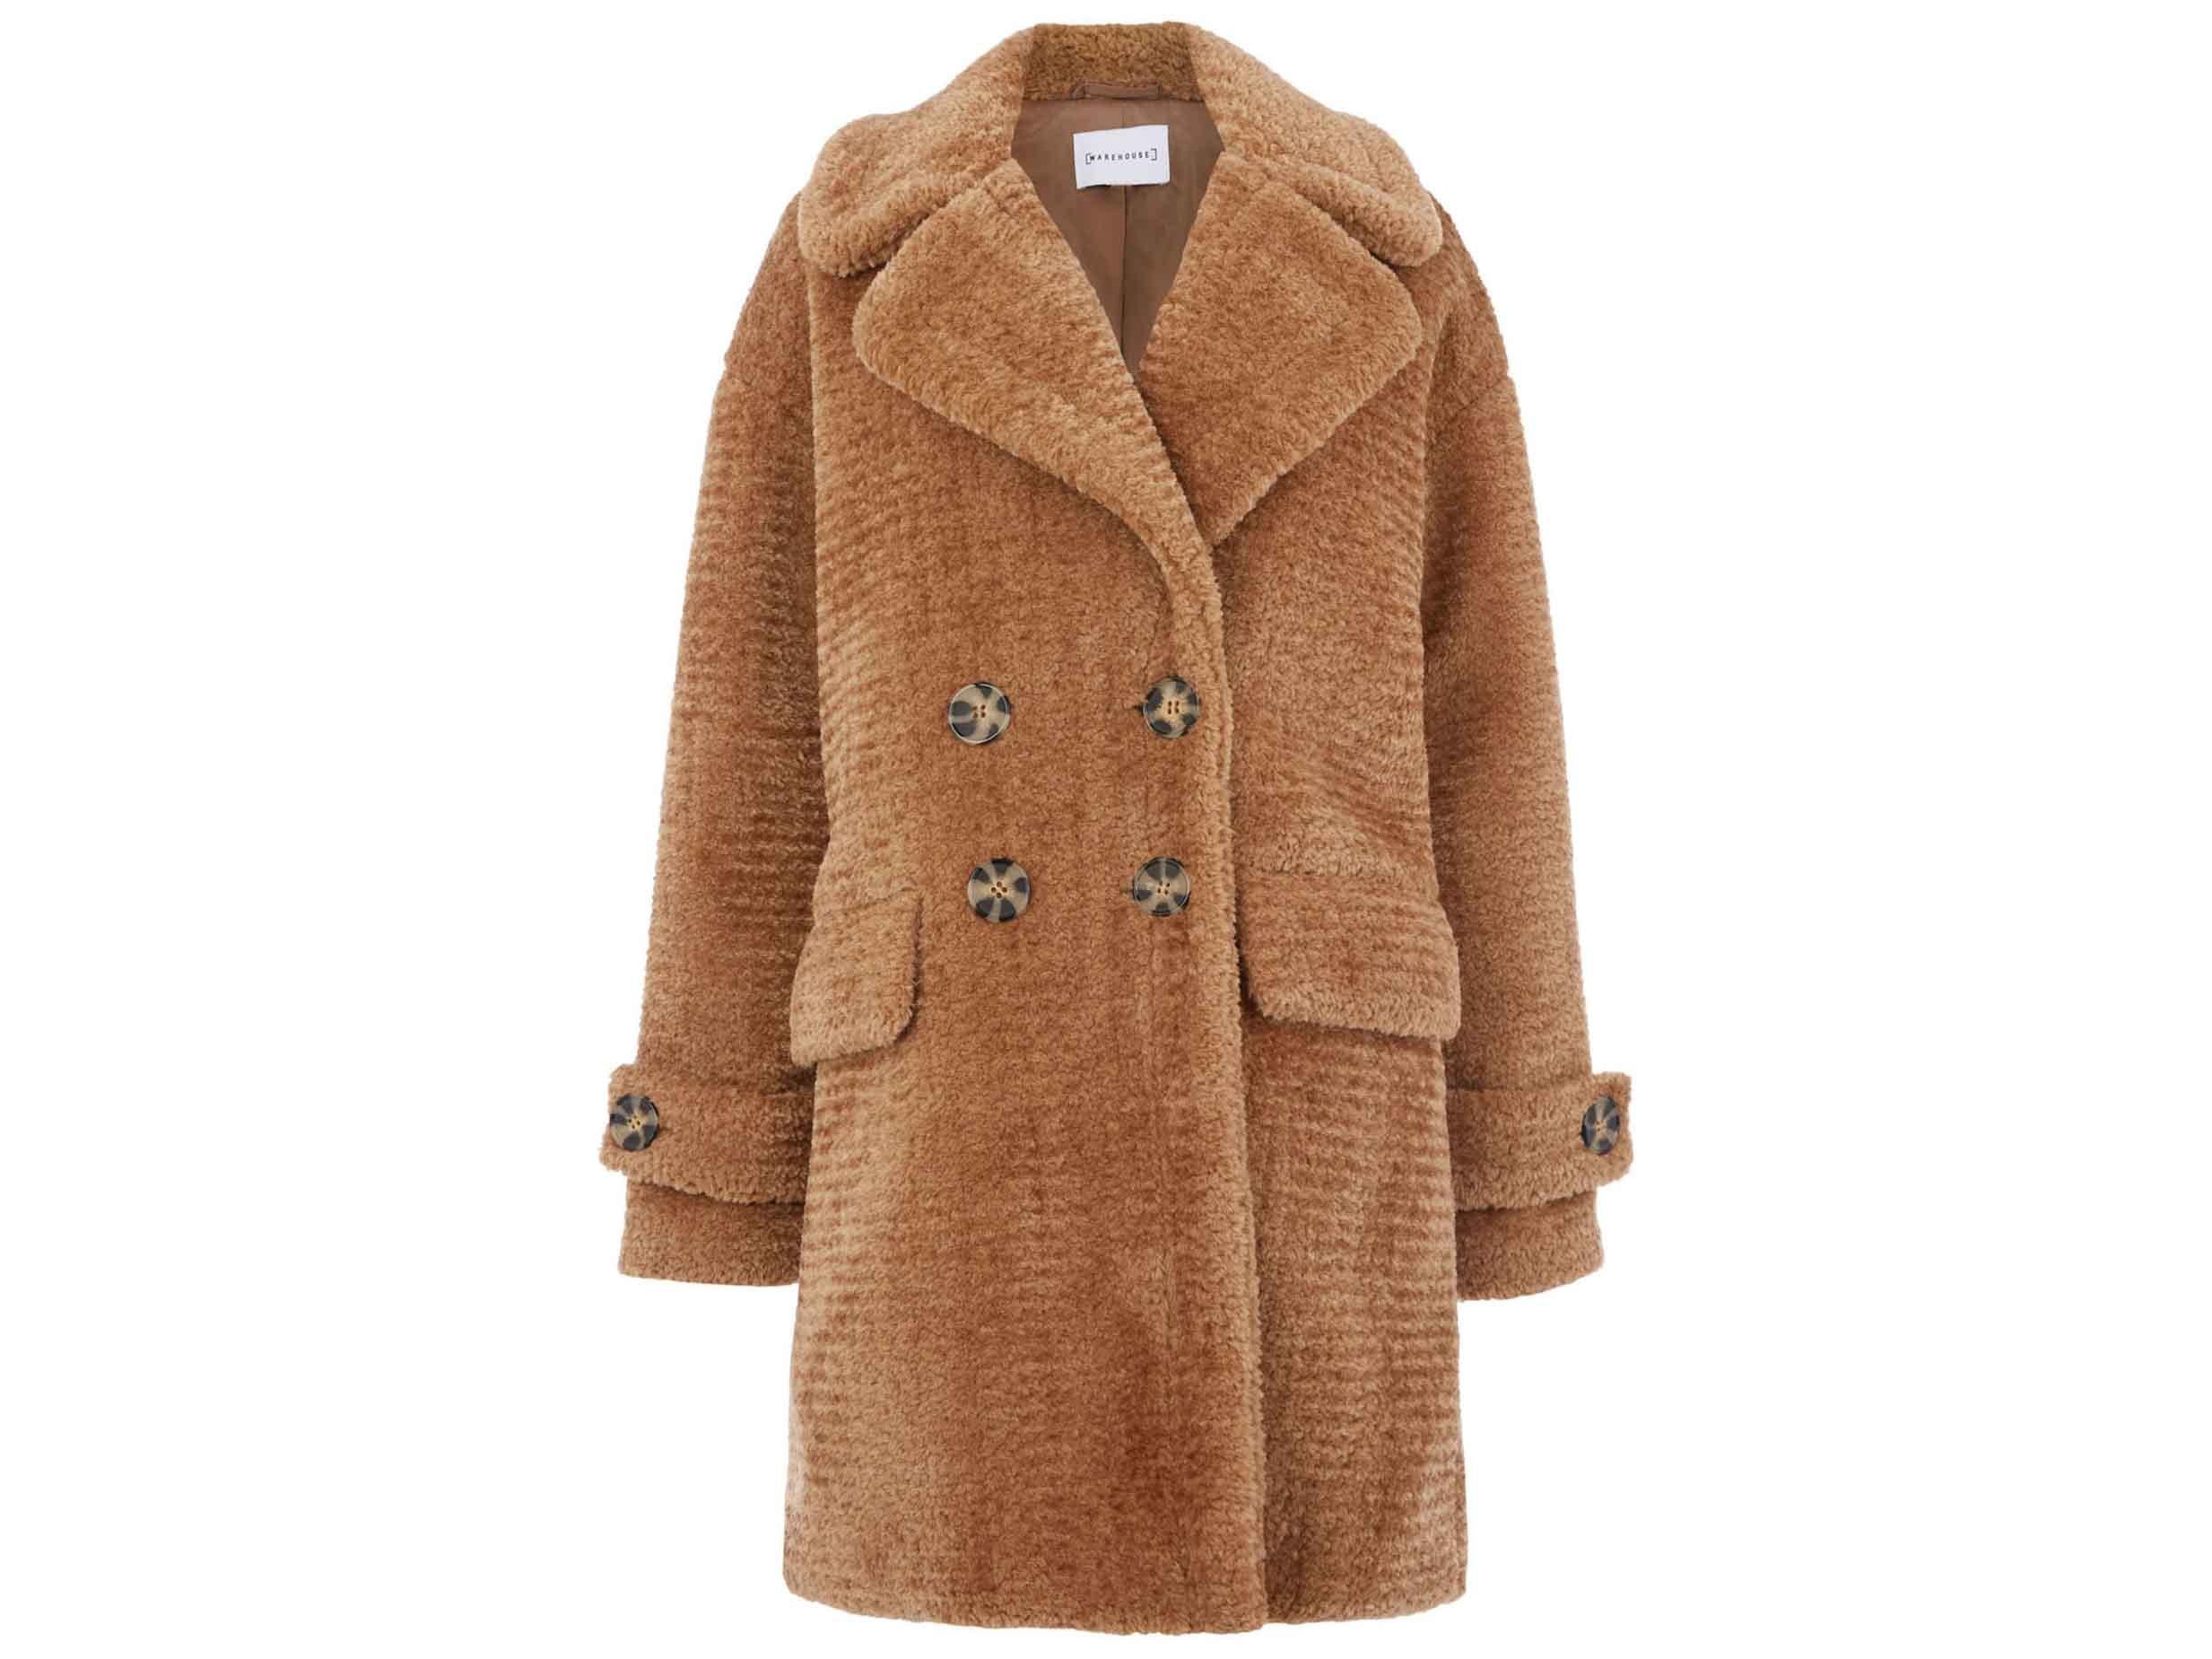 Oversized Teddy Coat, £89, Warehouse